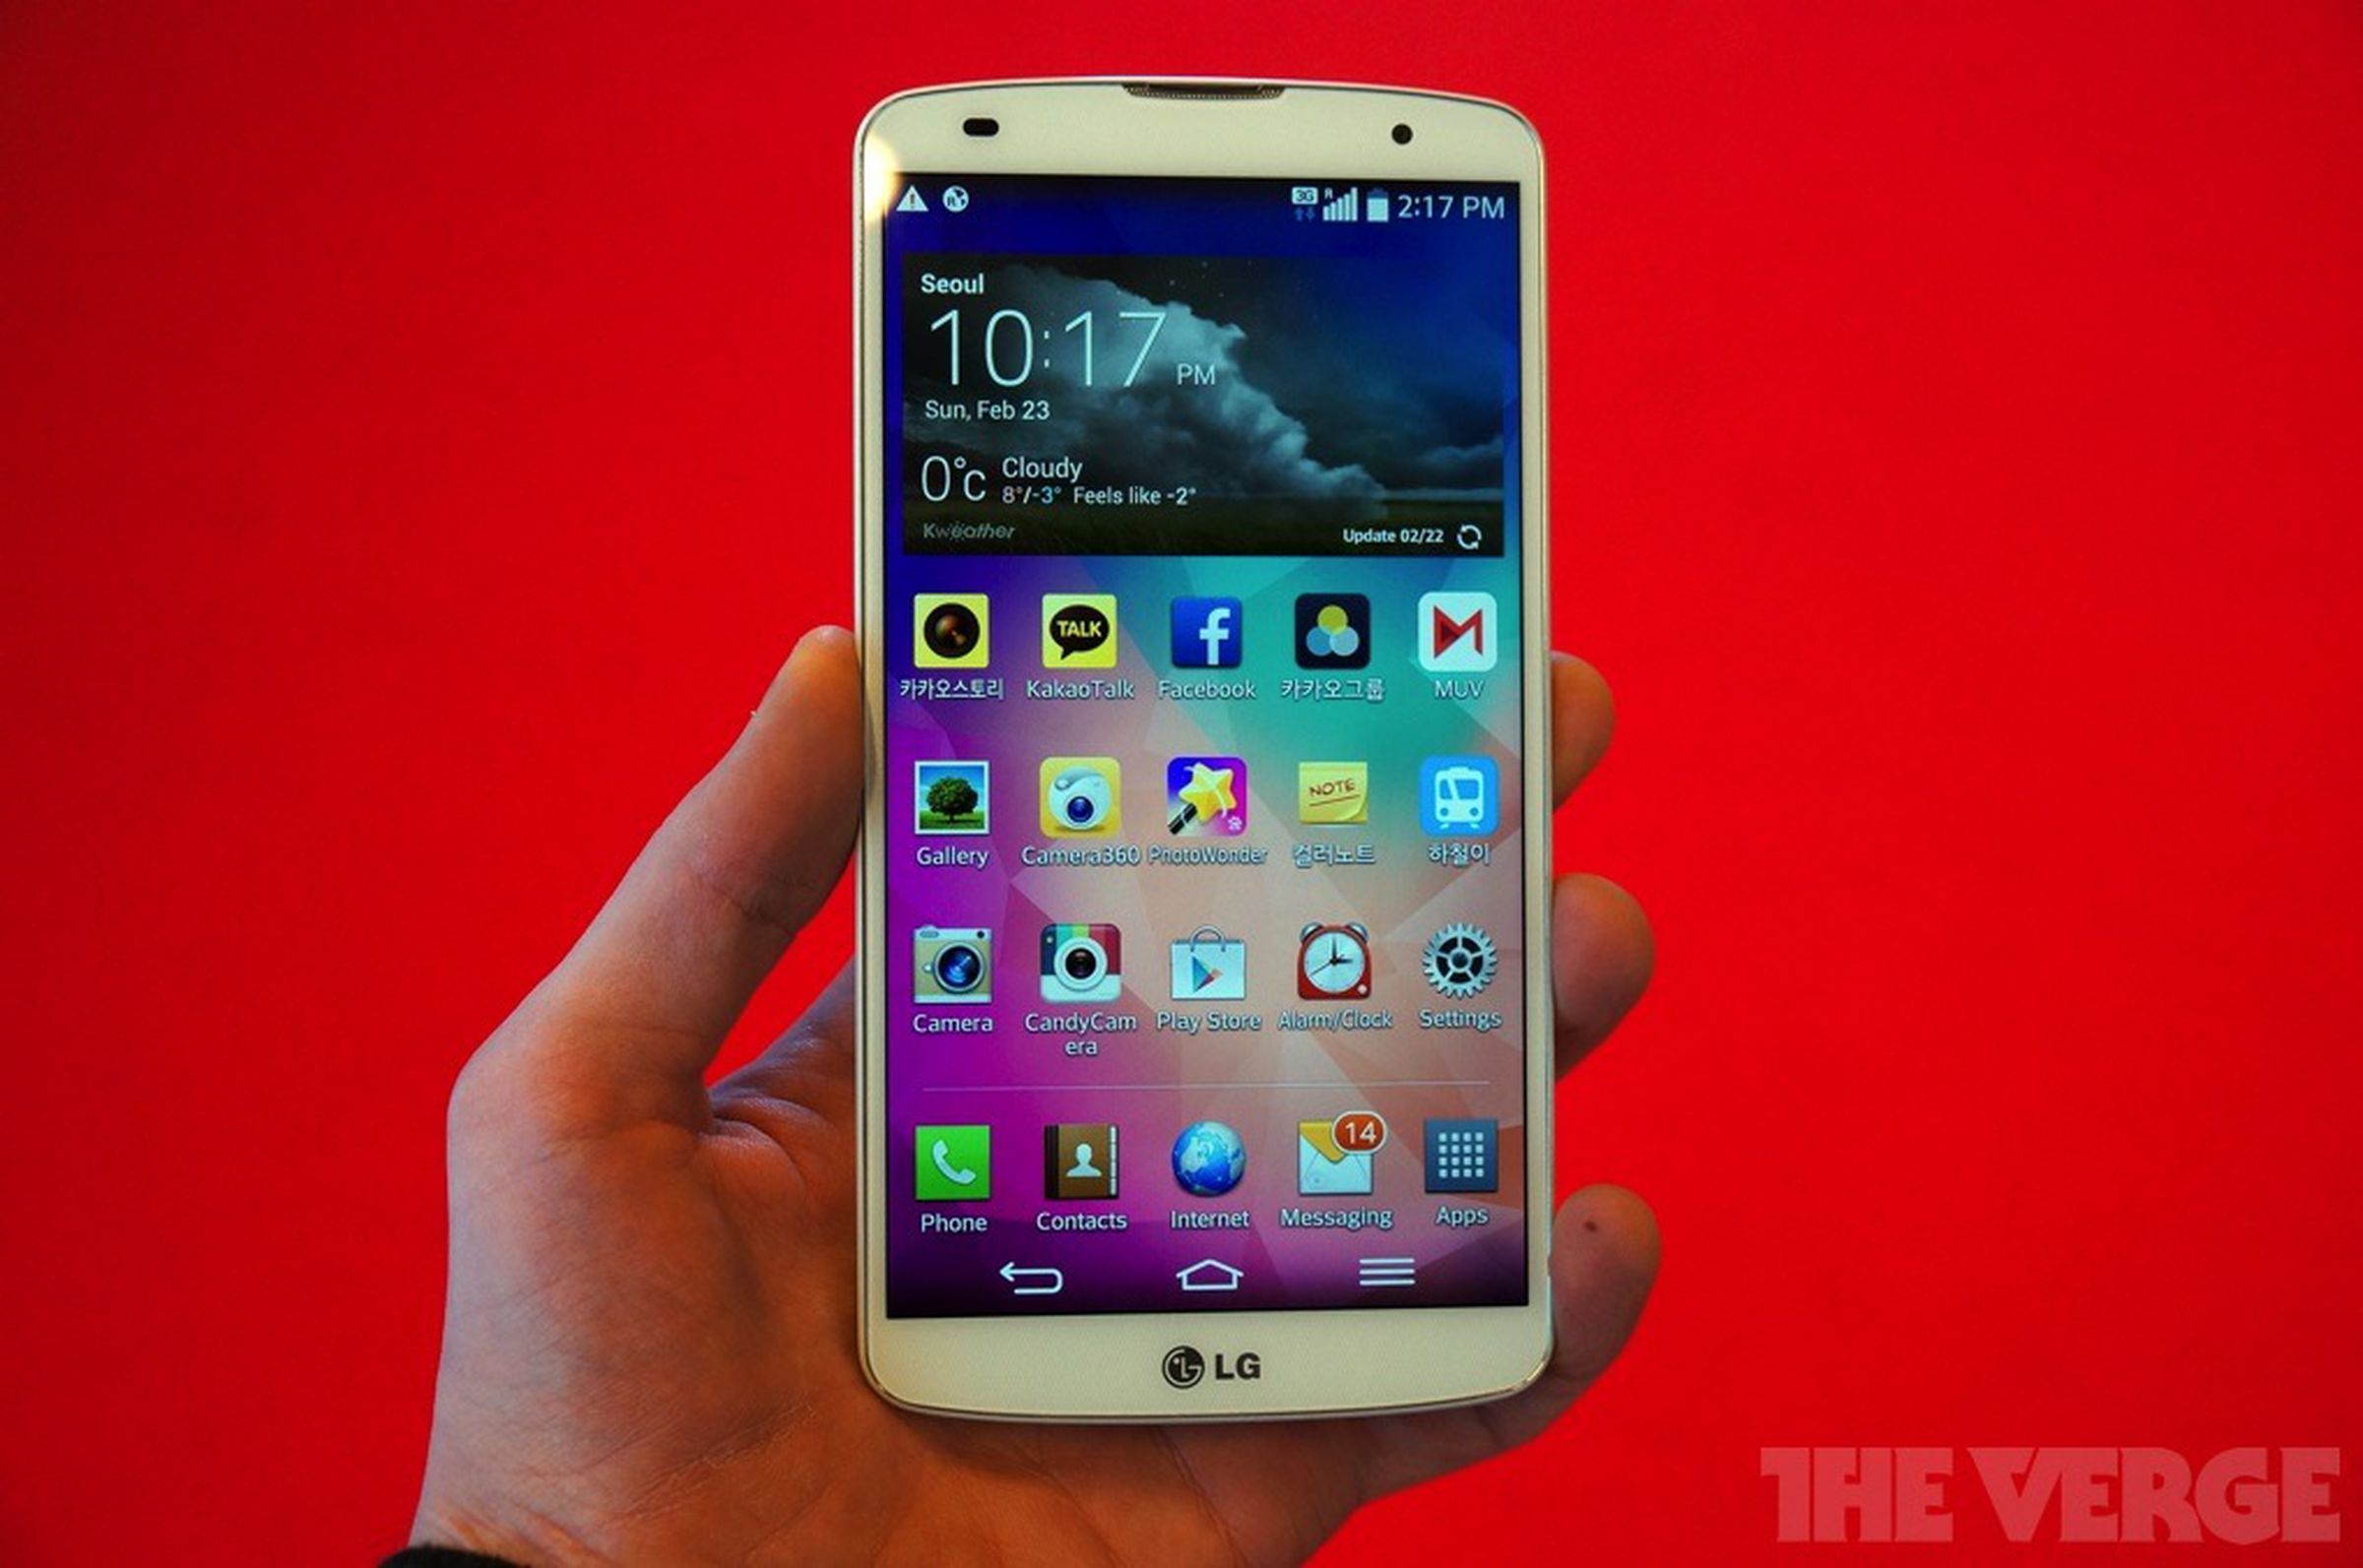 LG G Pro 2 hands-on photos